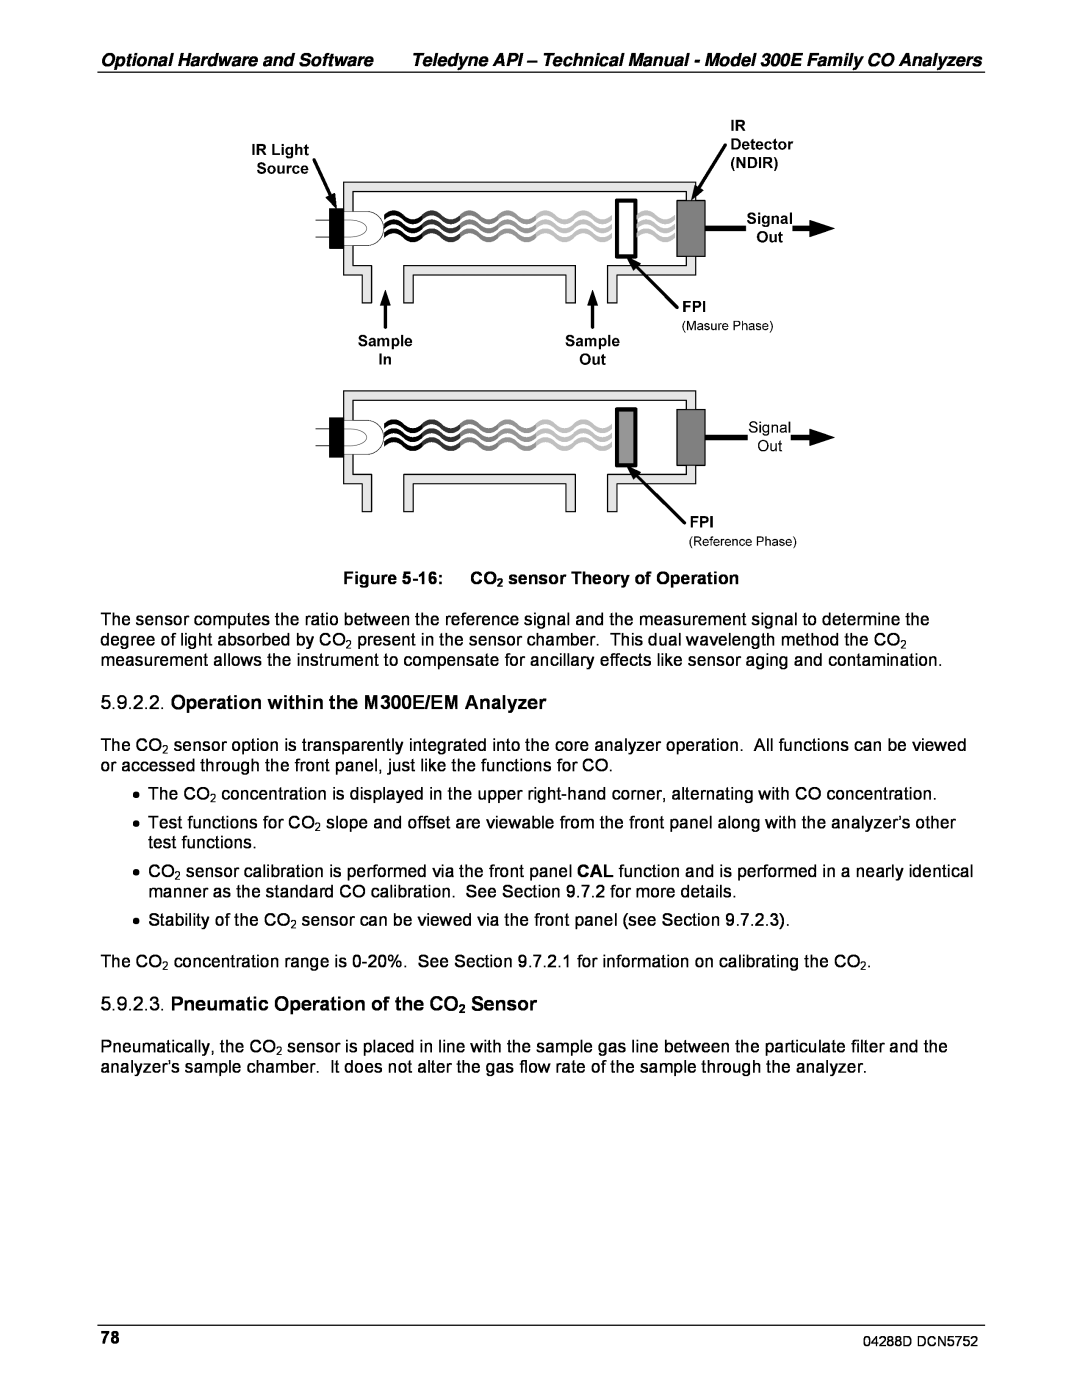 Teledyne M300EM operation manual Operation within the M300E/EM Analyzer, Pneumatic Operation of the CO2 Sensor 